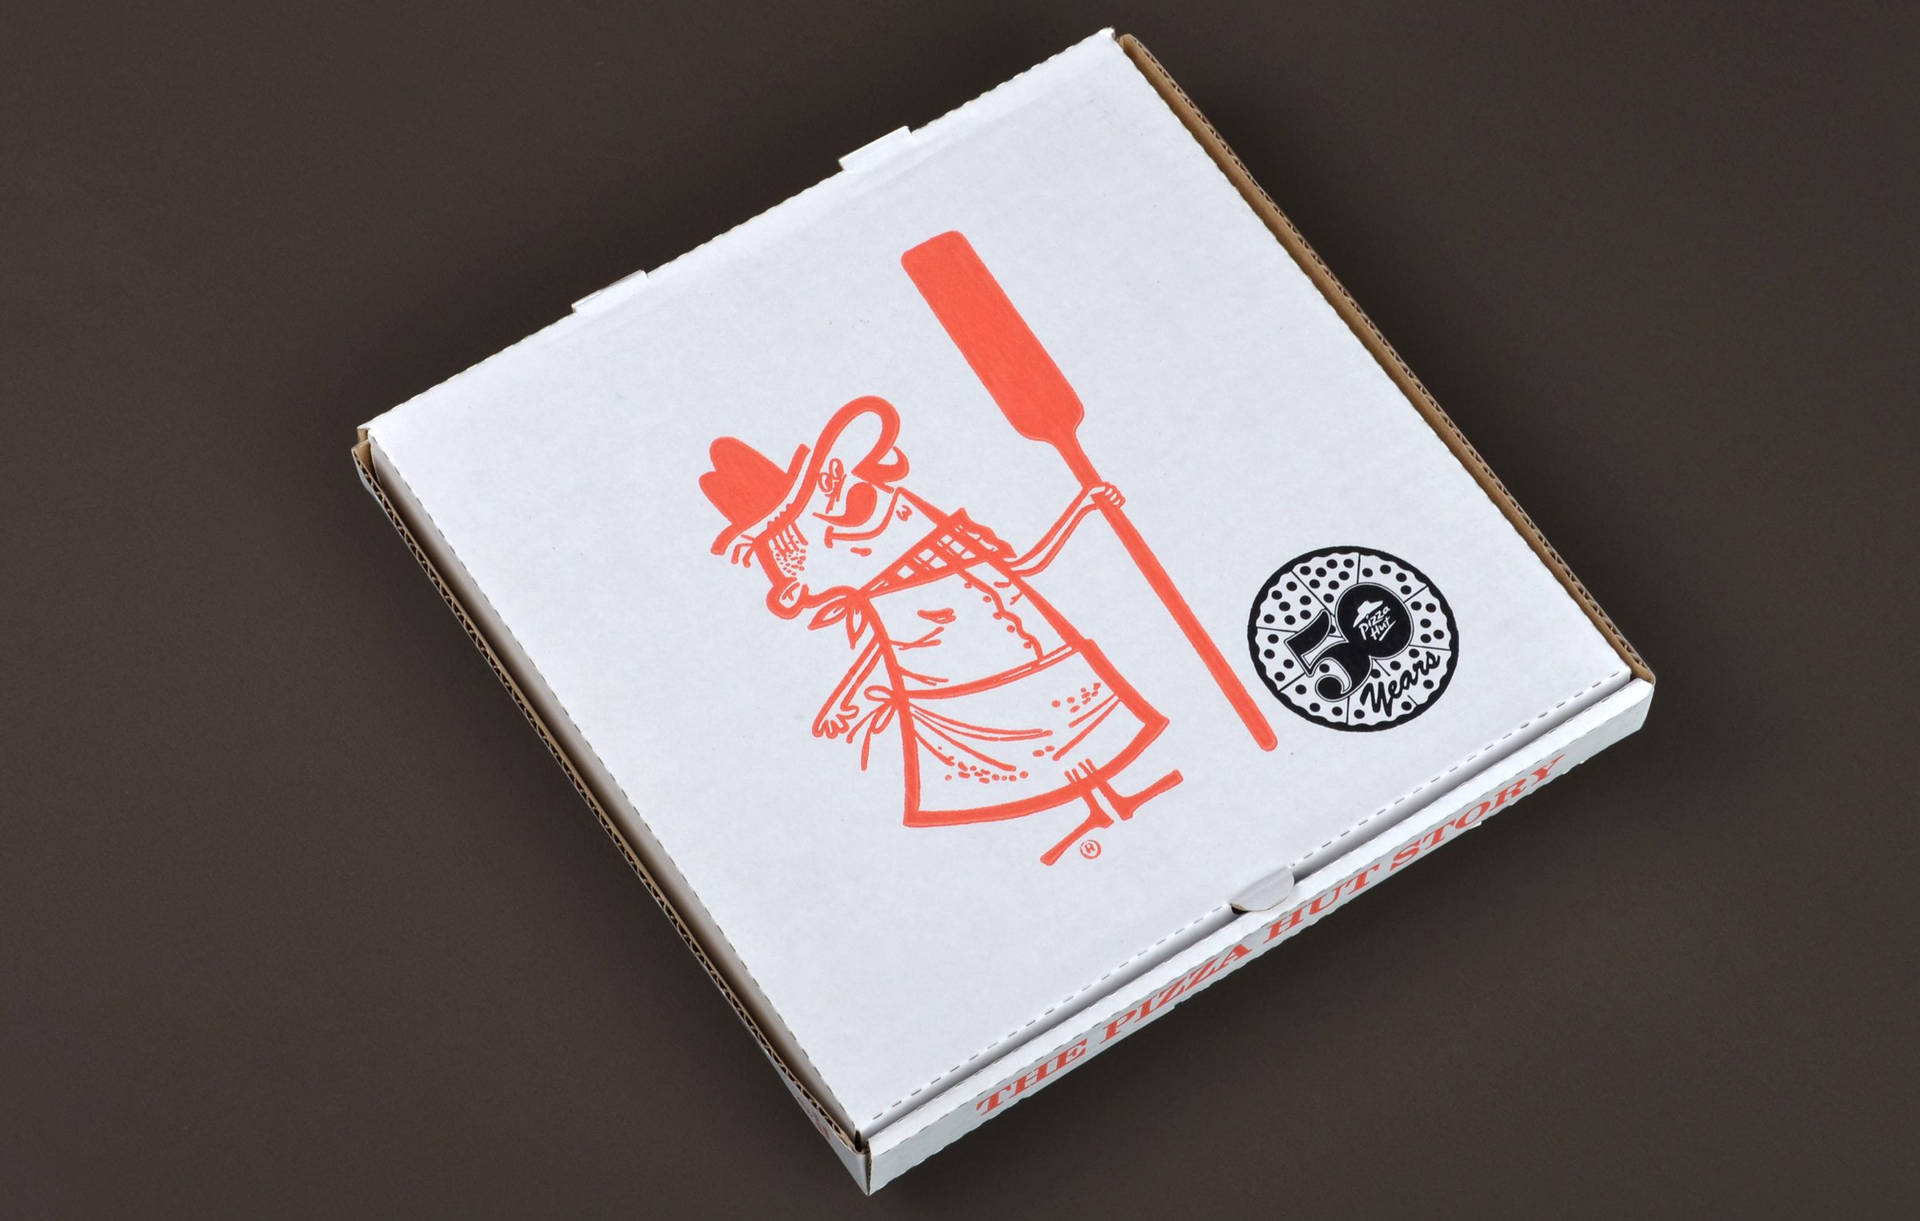 The Pizza Hut Story Box Background